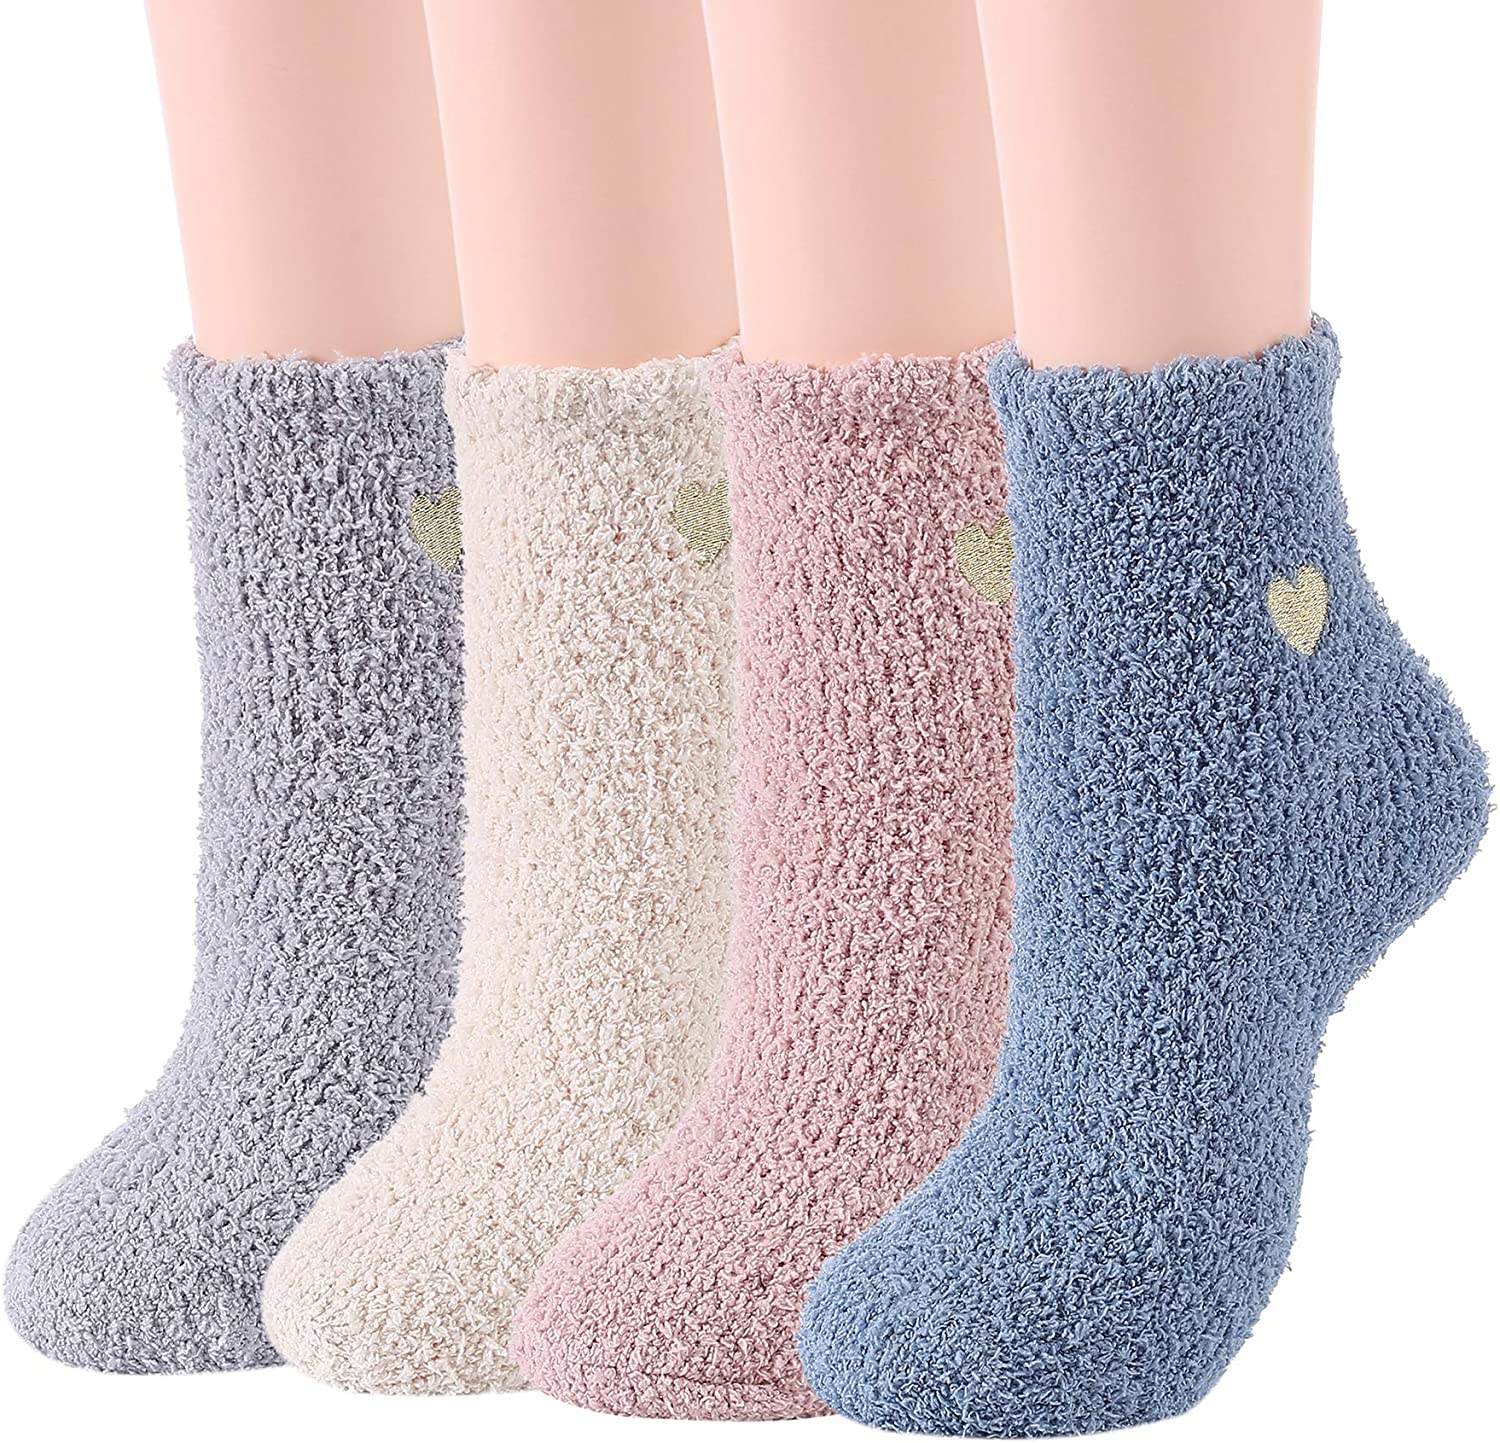 Details about   Zando Women Warm Super Soft Plush Slipper Sock Winter Fluffy Microfiber Crew Soc